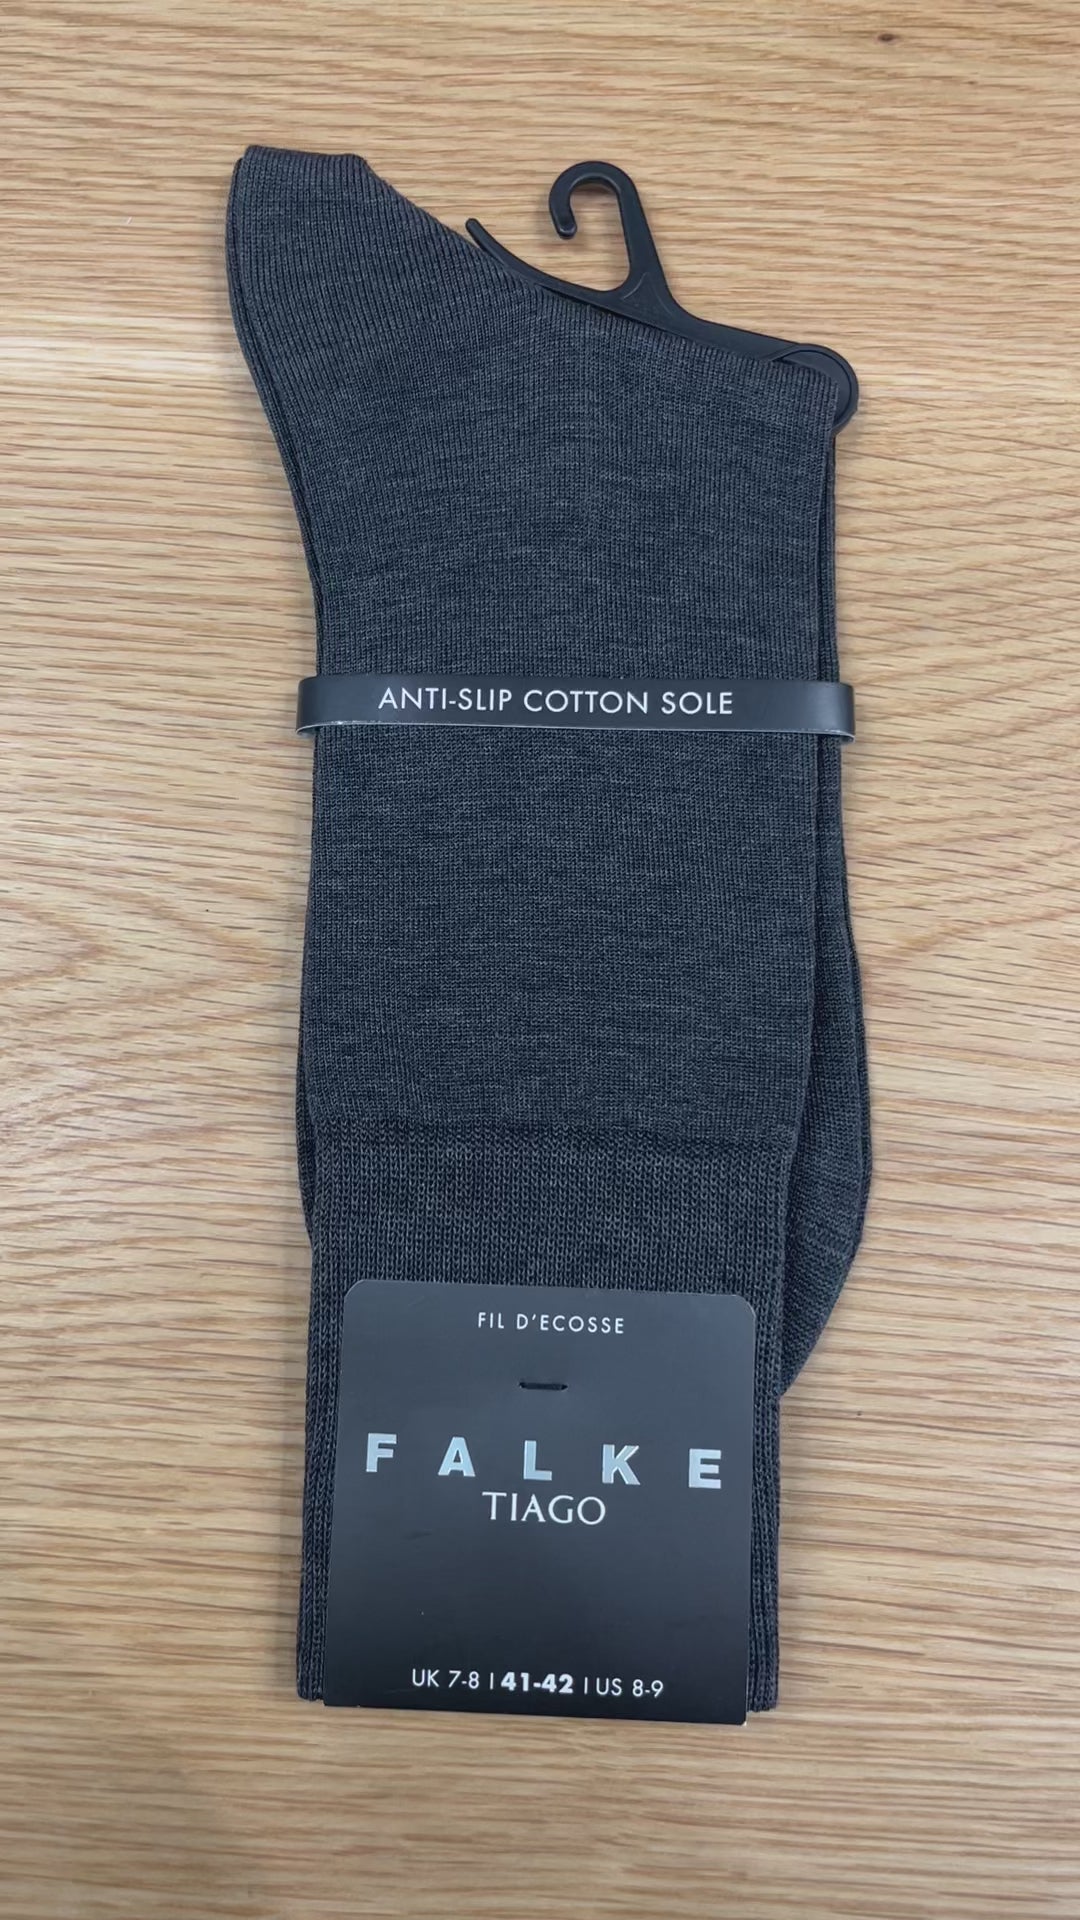 Falke charcoal dress sock